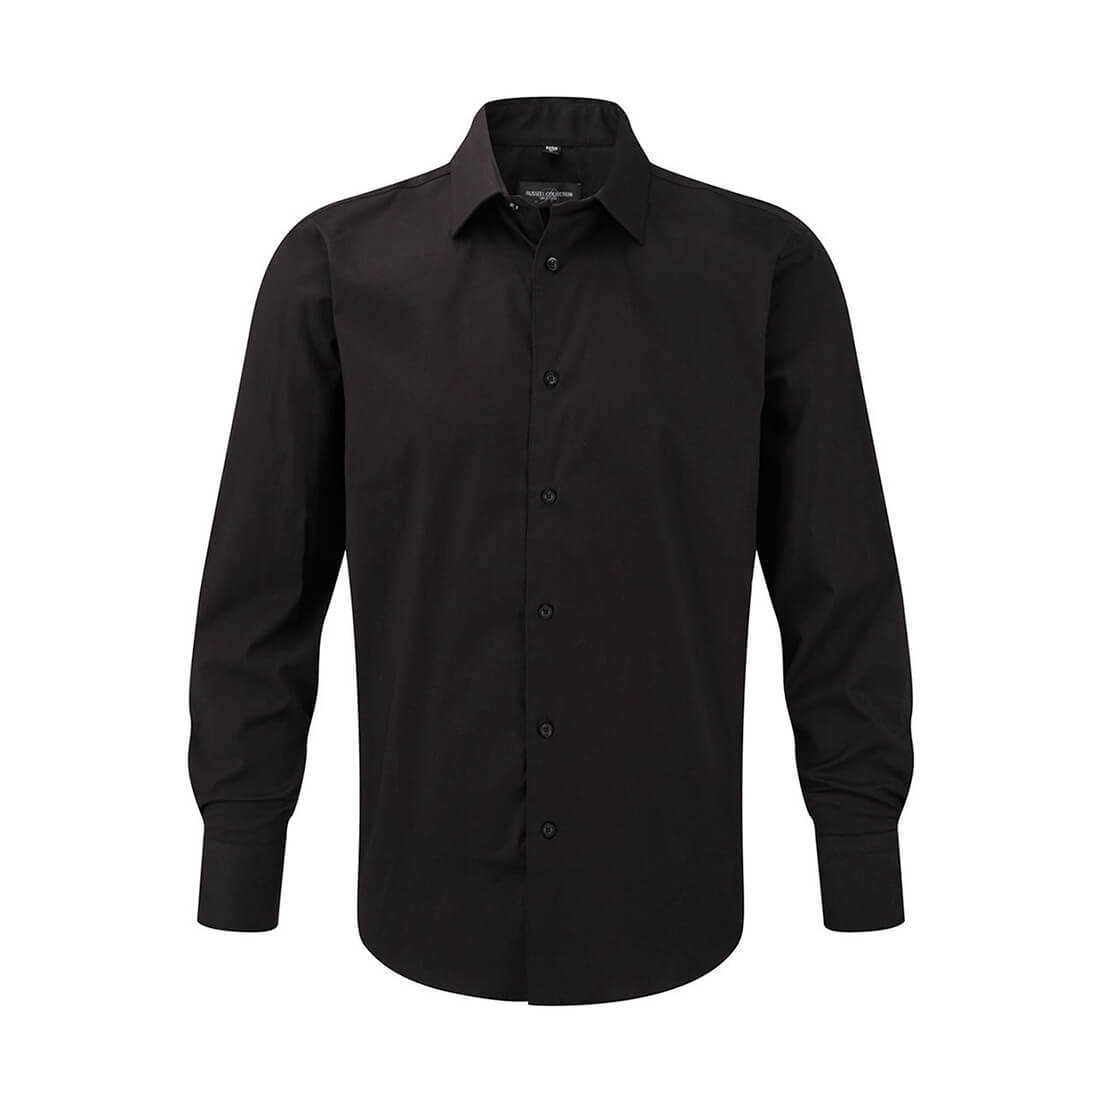 Fitted Long Sleeve Stretch Shirt - Les vêtements de protection